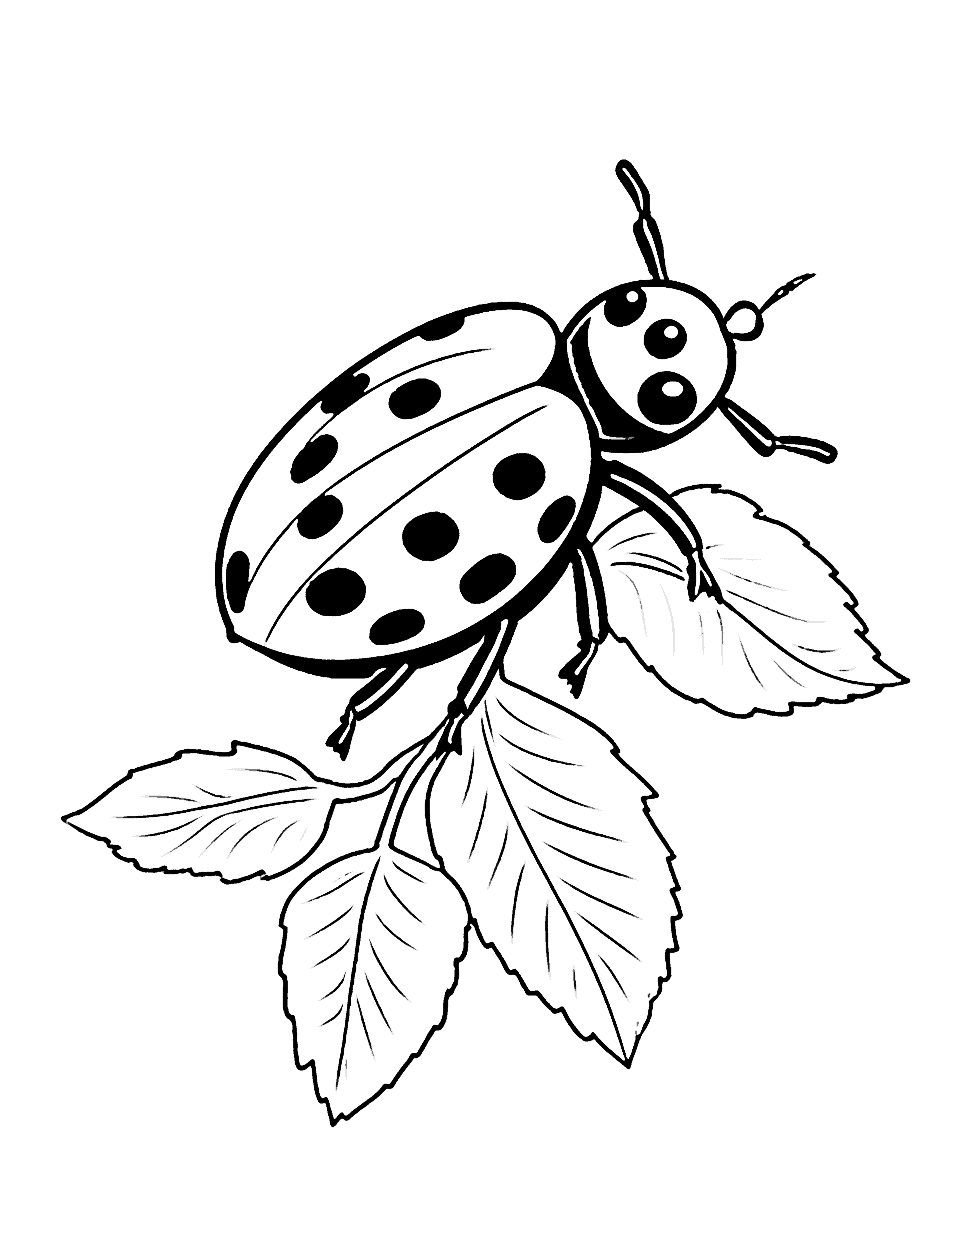 Cute Ladybug on a Leaf Coloring Page - A small ladybug crawling on a green leaf.